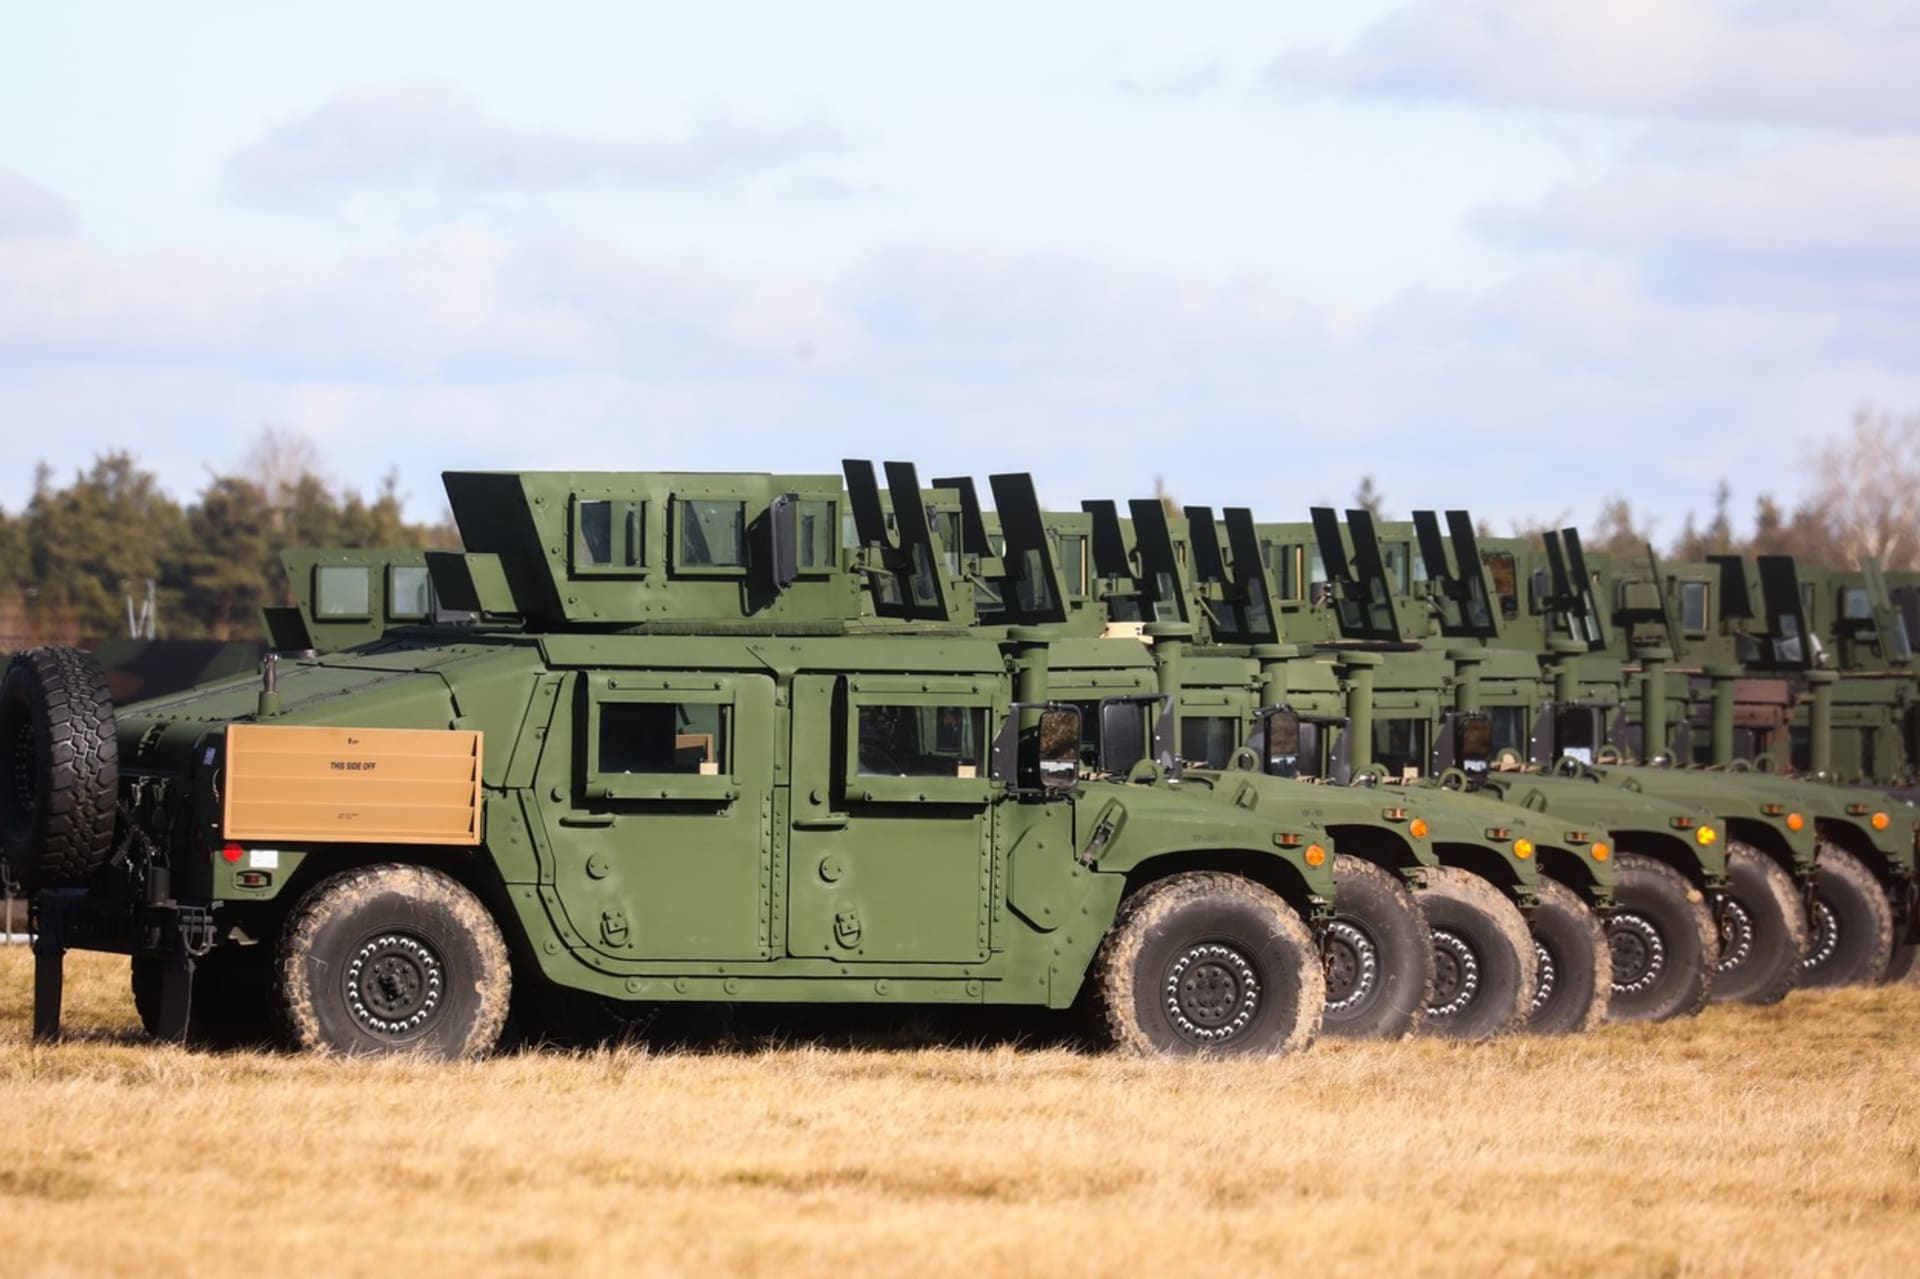 Vozy Humvee seřazené na vojenské základně Mielec v Polsku